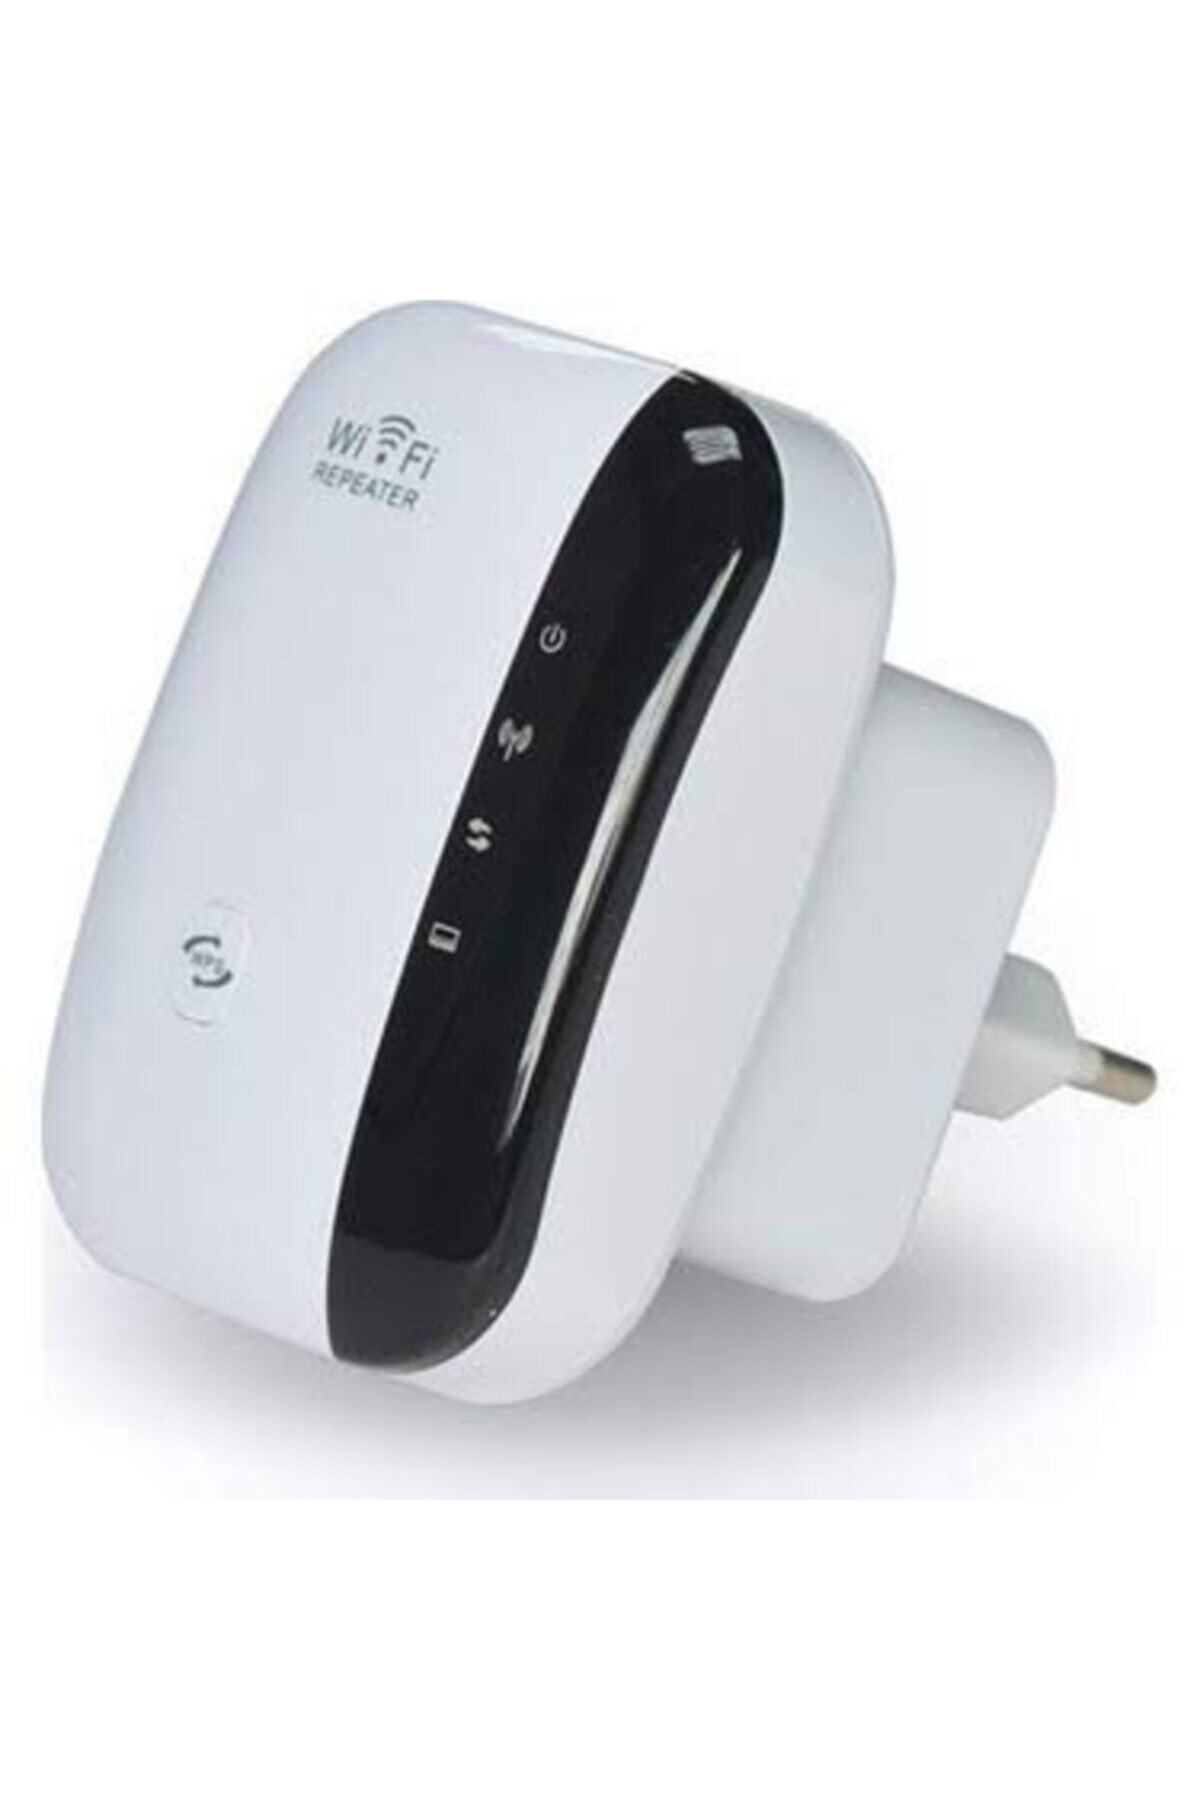 BarsCon Wifi Repeater Kablosuz Sinyal Güçlendirici Access Point 300mbps Hd9100